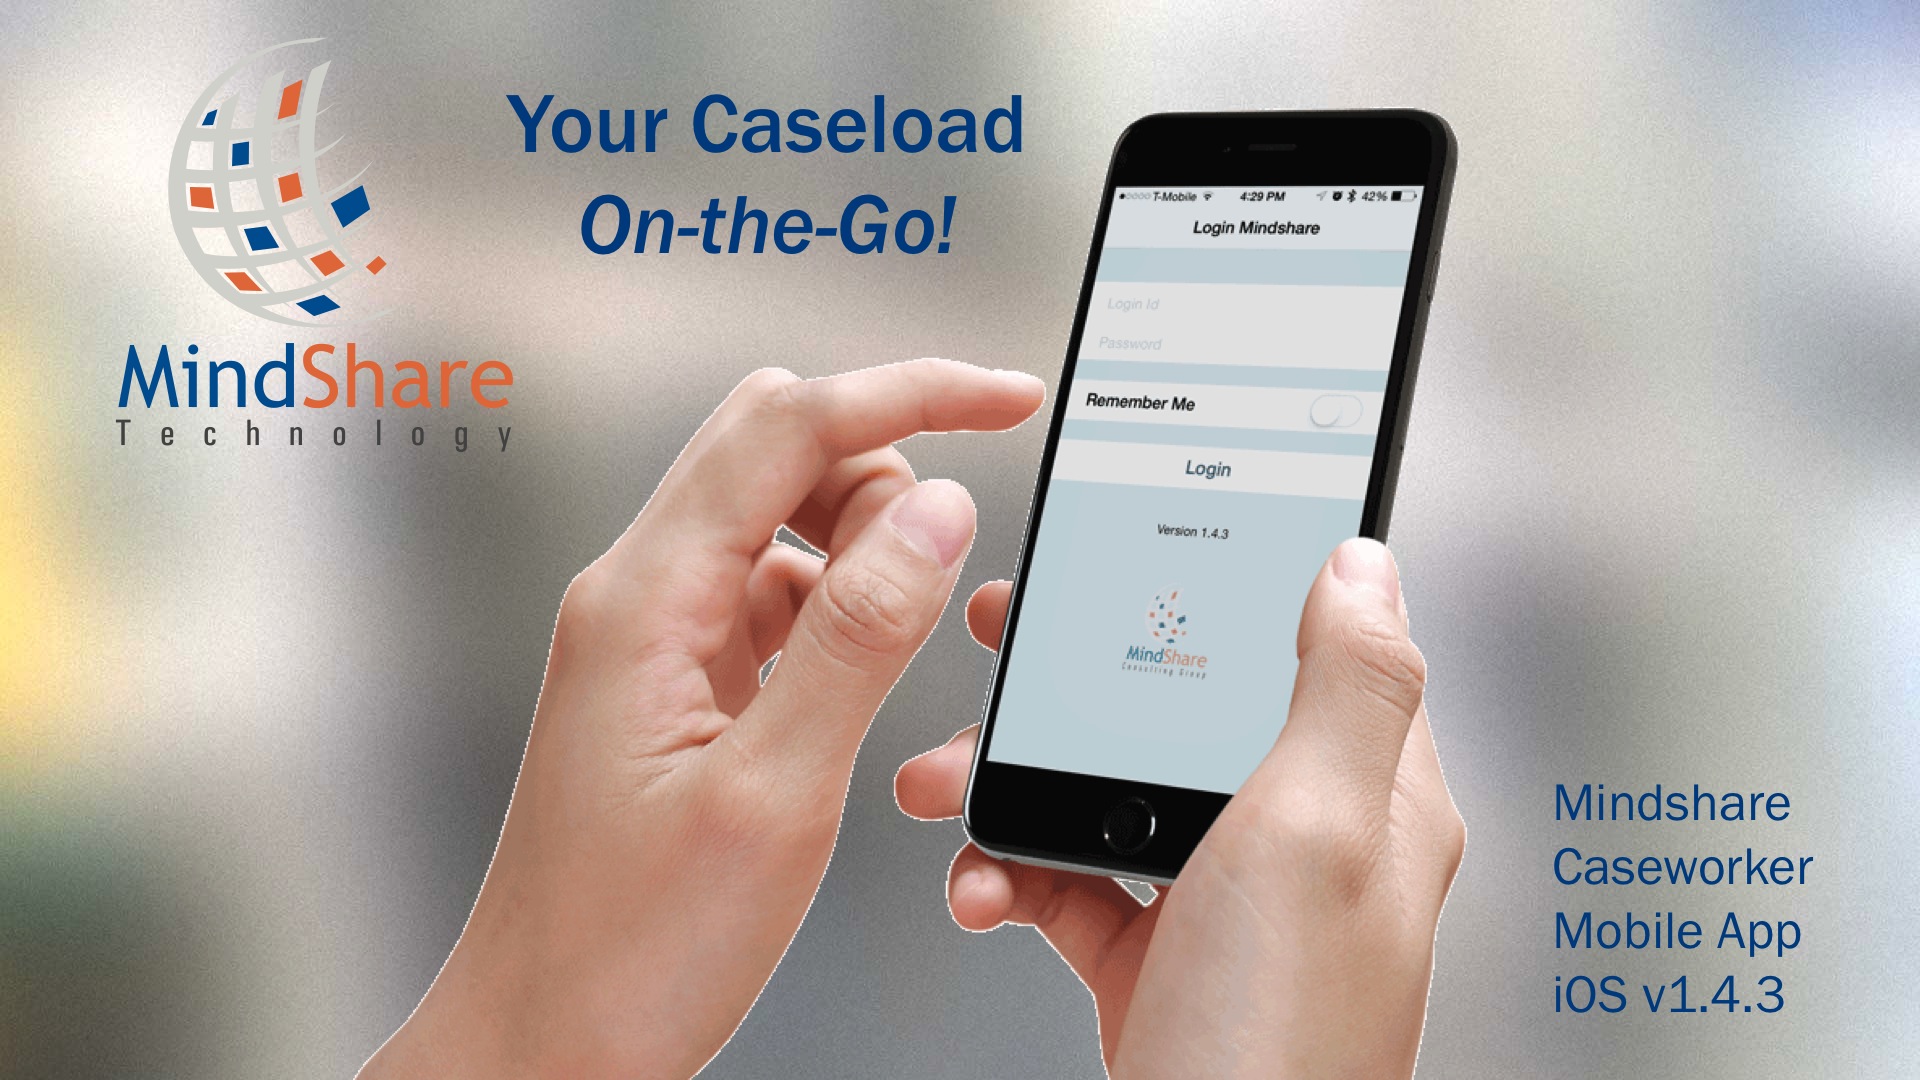 Caseworker Mobile App iOS